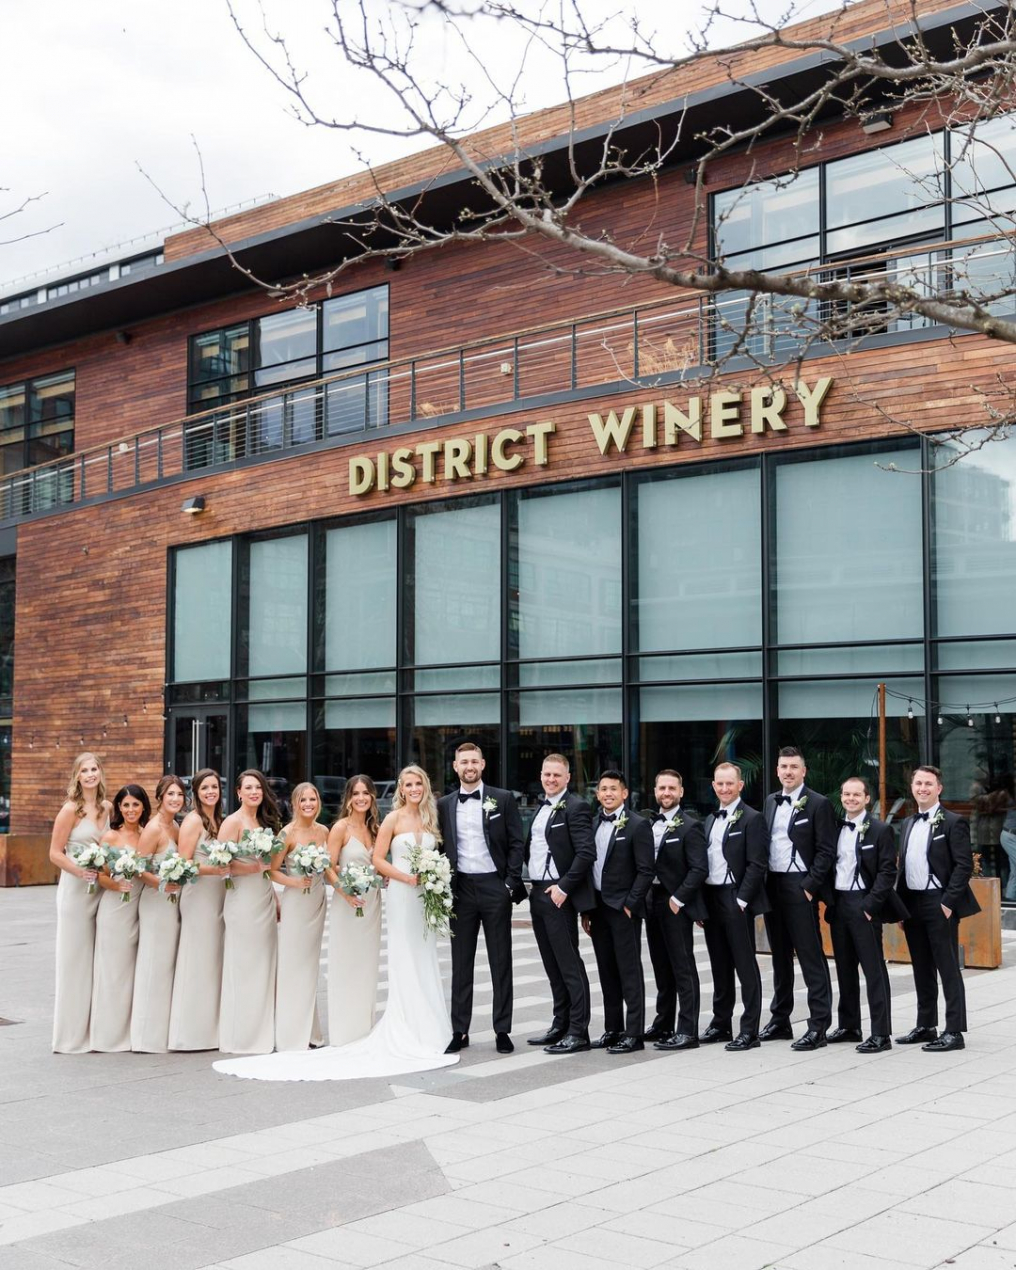 District Winery Venue photo